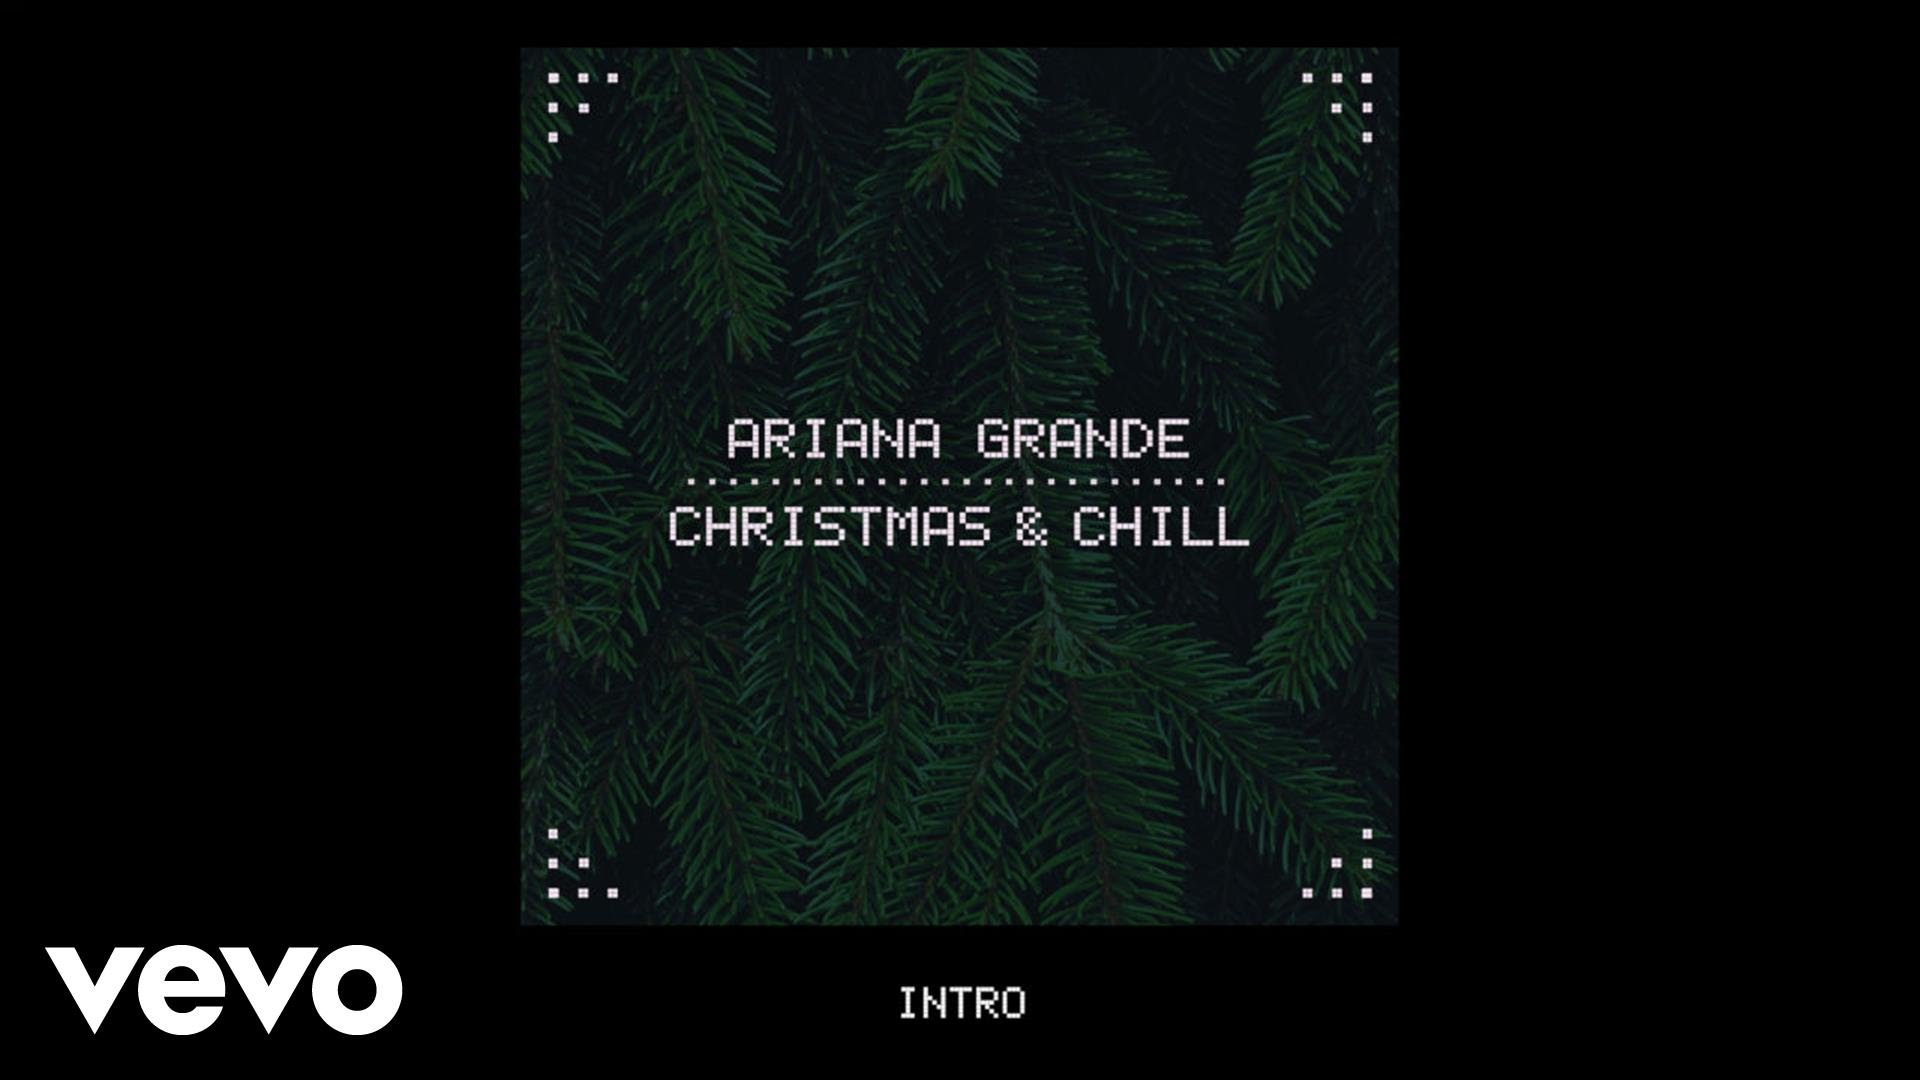 Ariana Grande - Winter Things (Audio) - YouTube